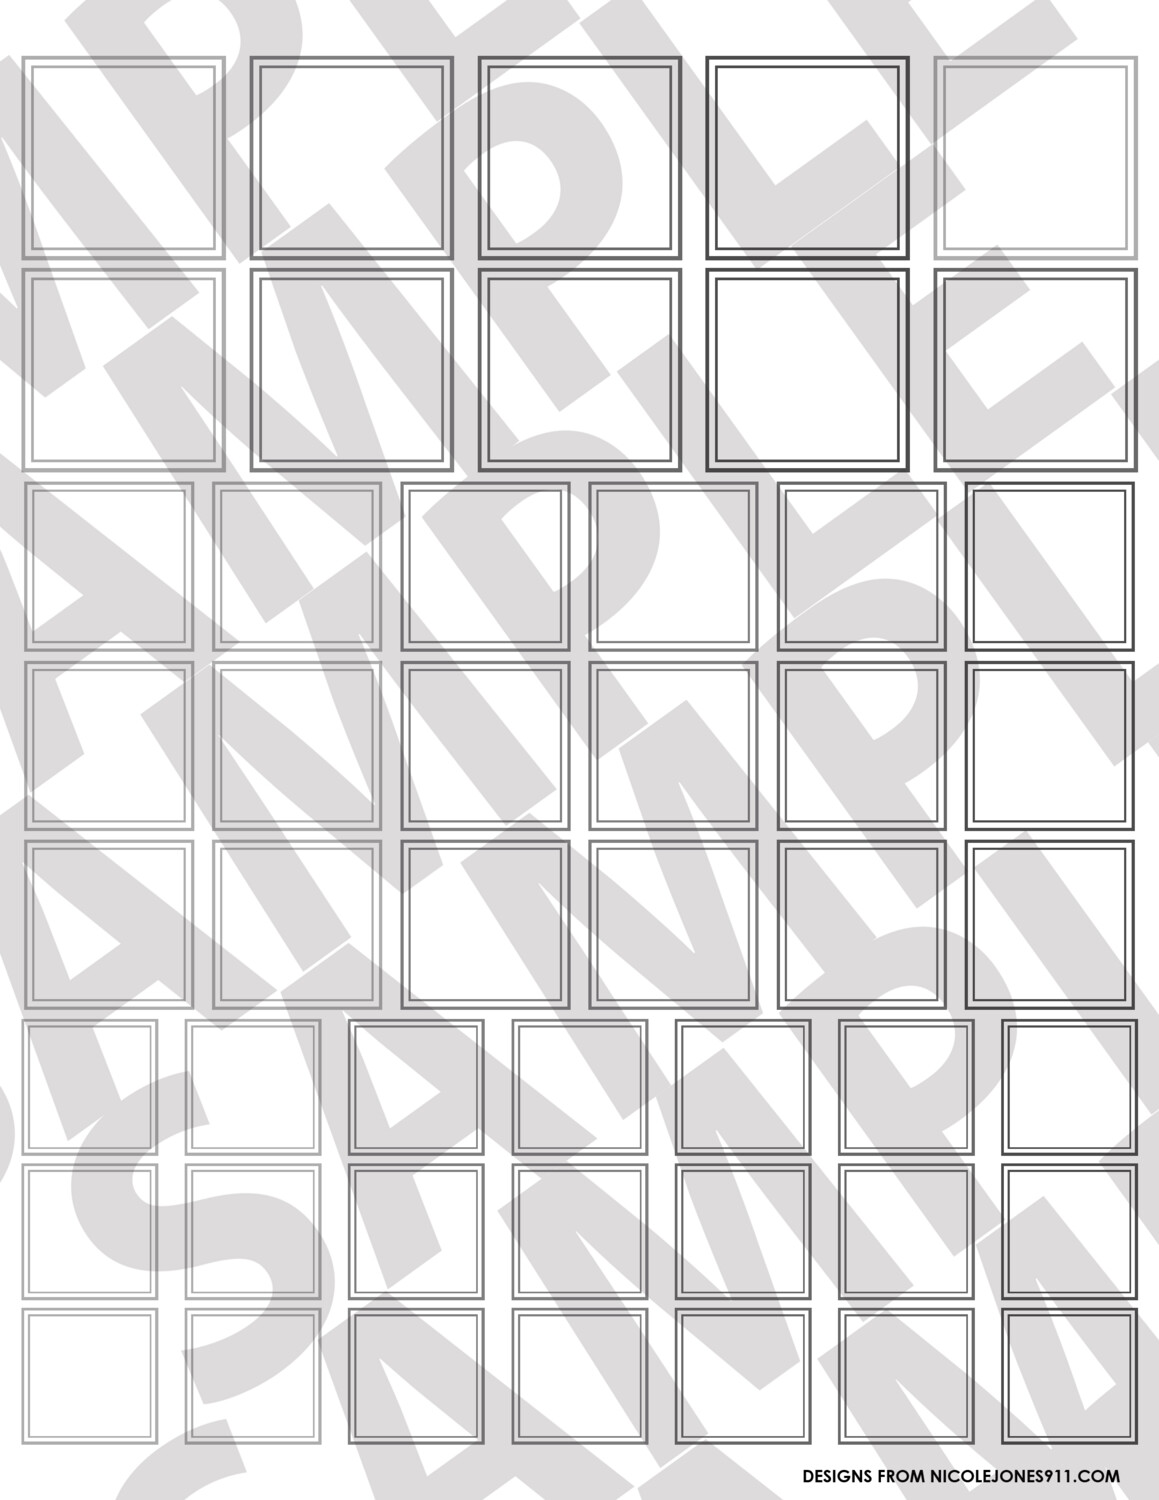 Light Gray - Smaller Squares